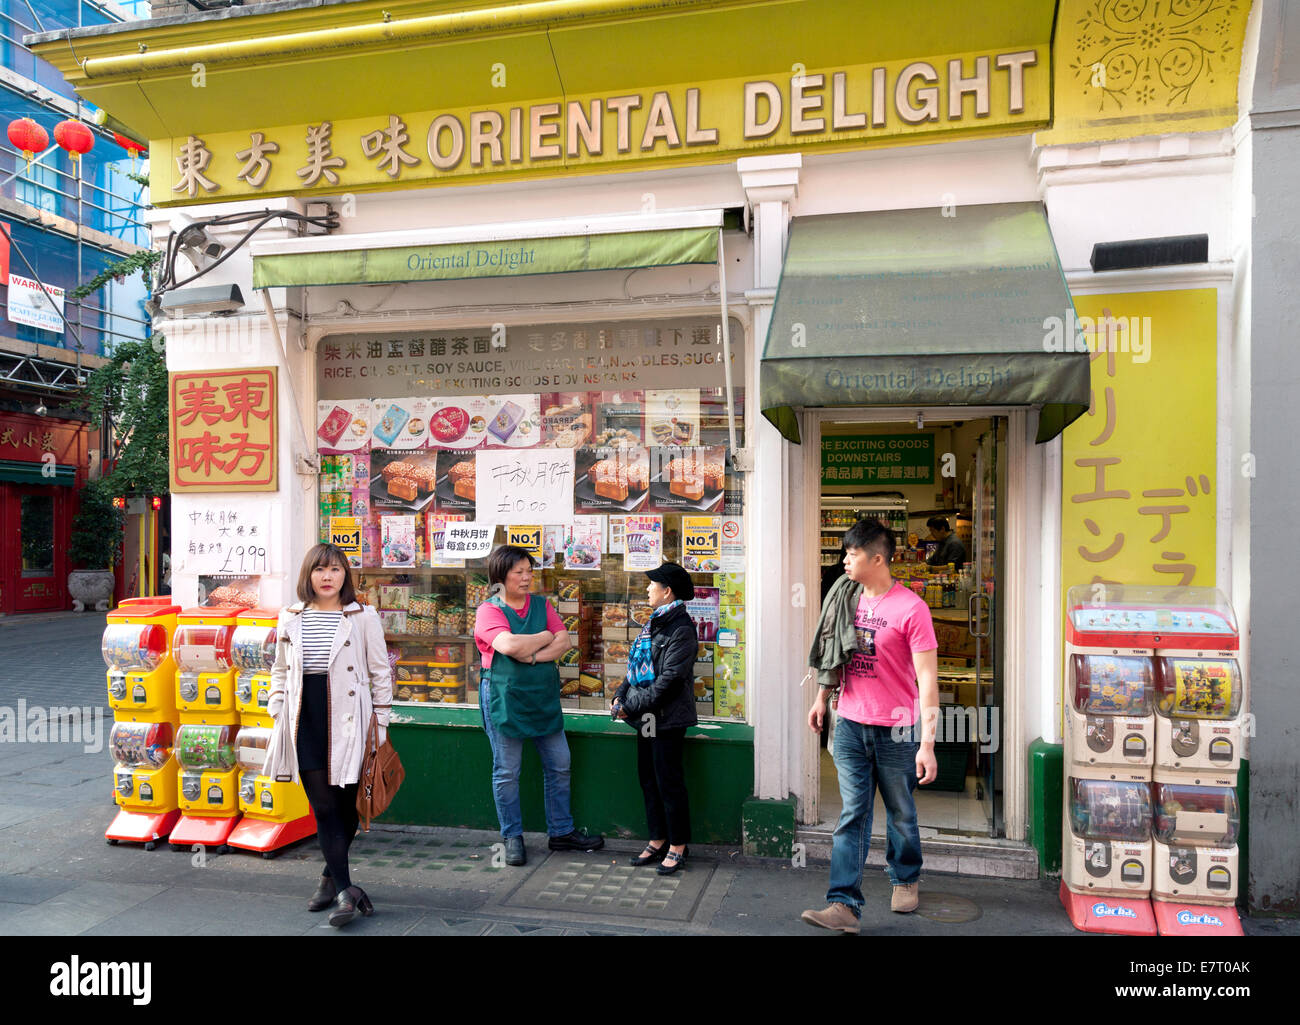 Ein chinesisches Lebensmittelgeschäft, Gerrard Street, Chinatown, Soho, London UK Stockfoto